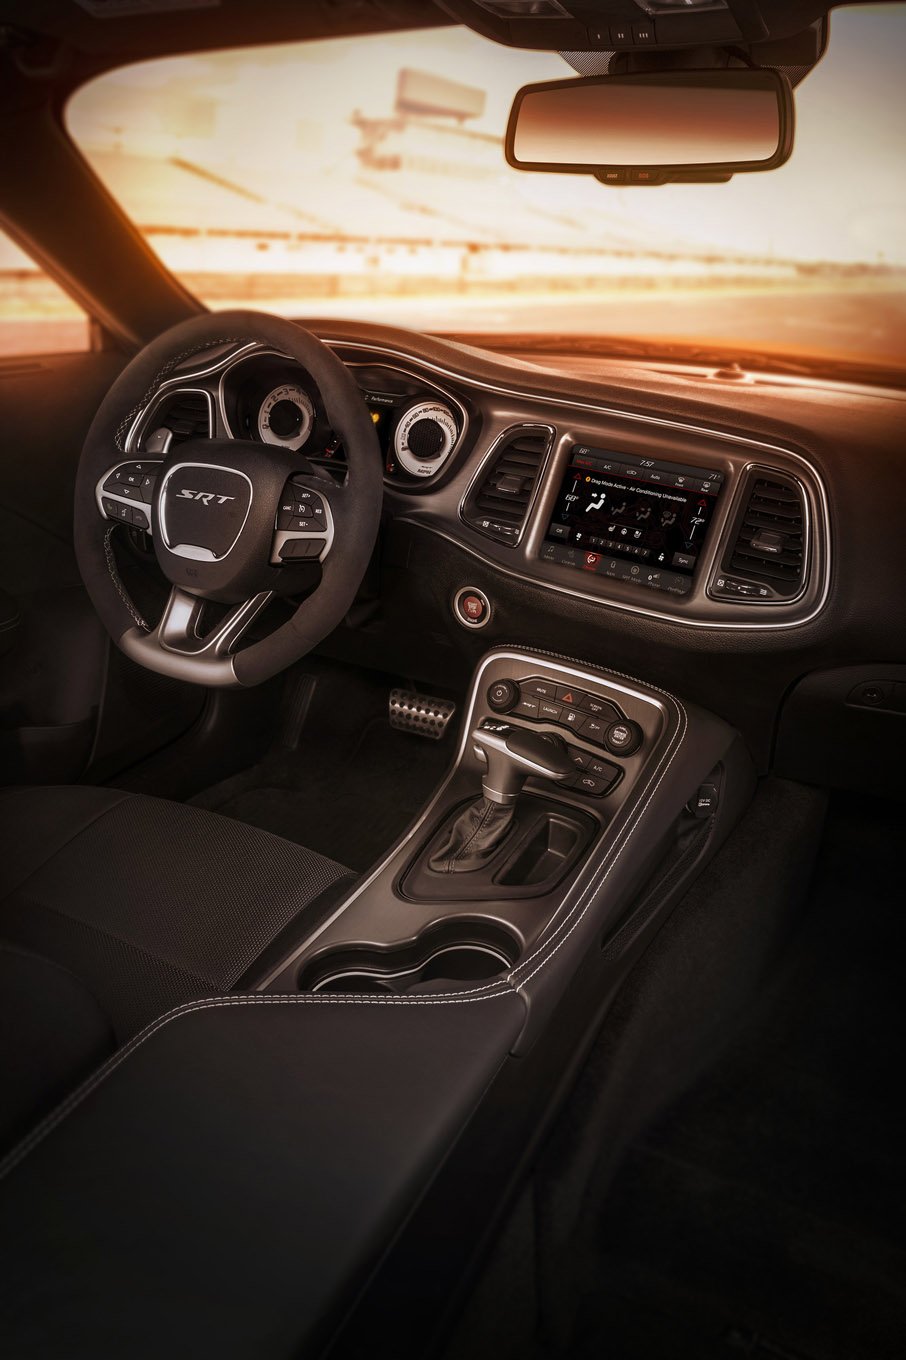 Interior of the 2018 Dodge Challenger SRT Demon